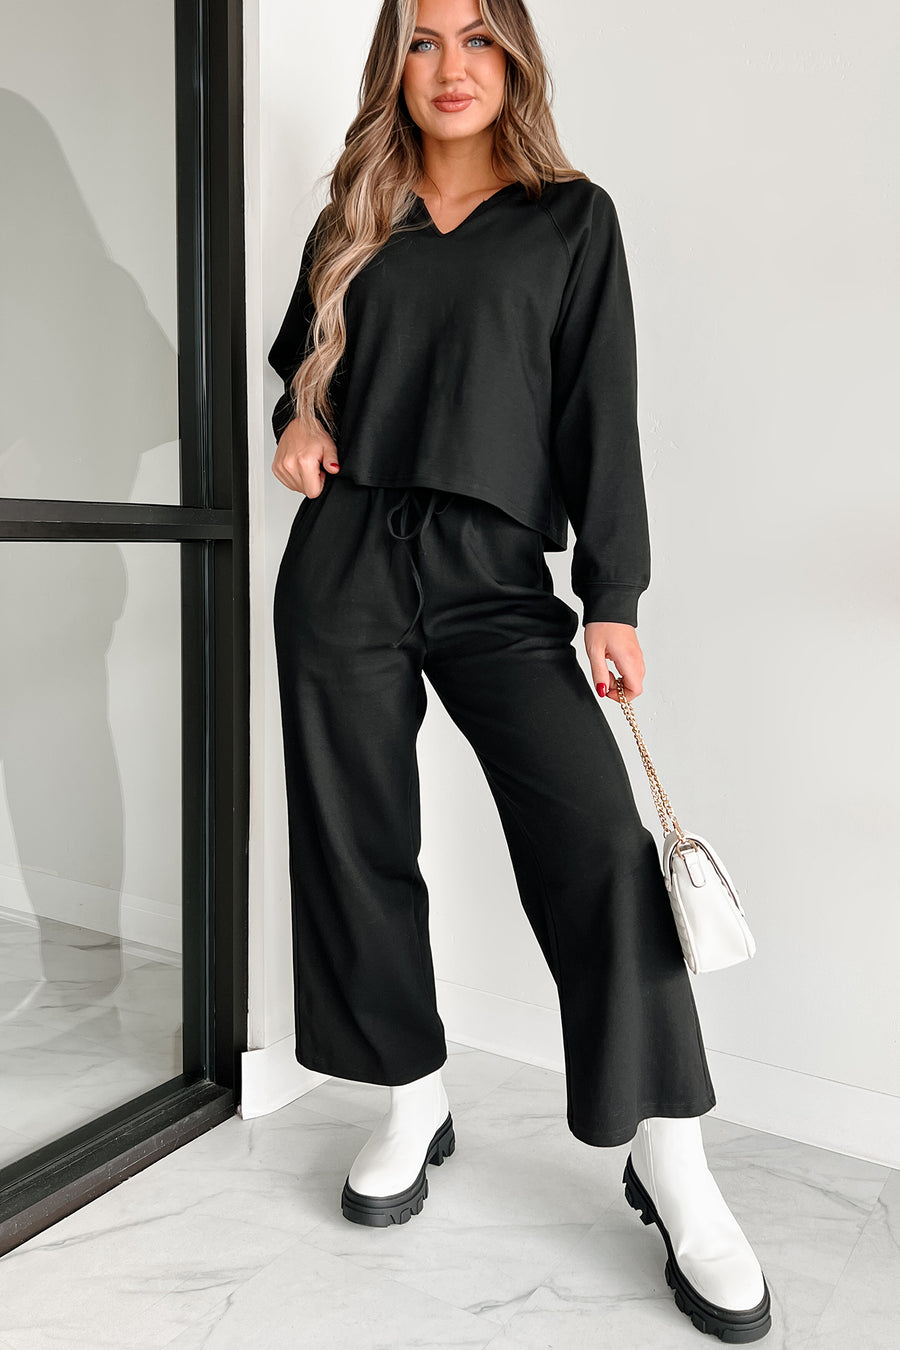 Working From Home Two-Piece Loungewear Set (Black) - NanaMacs